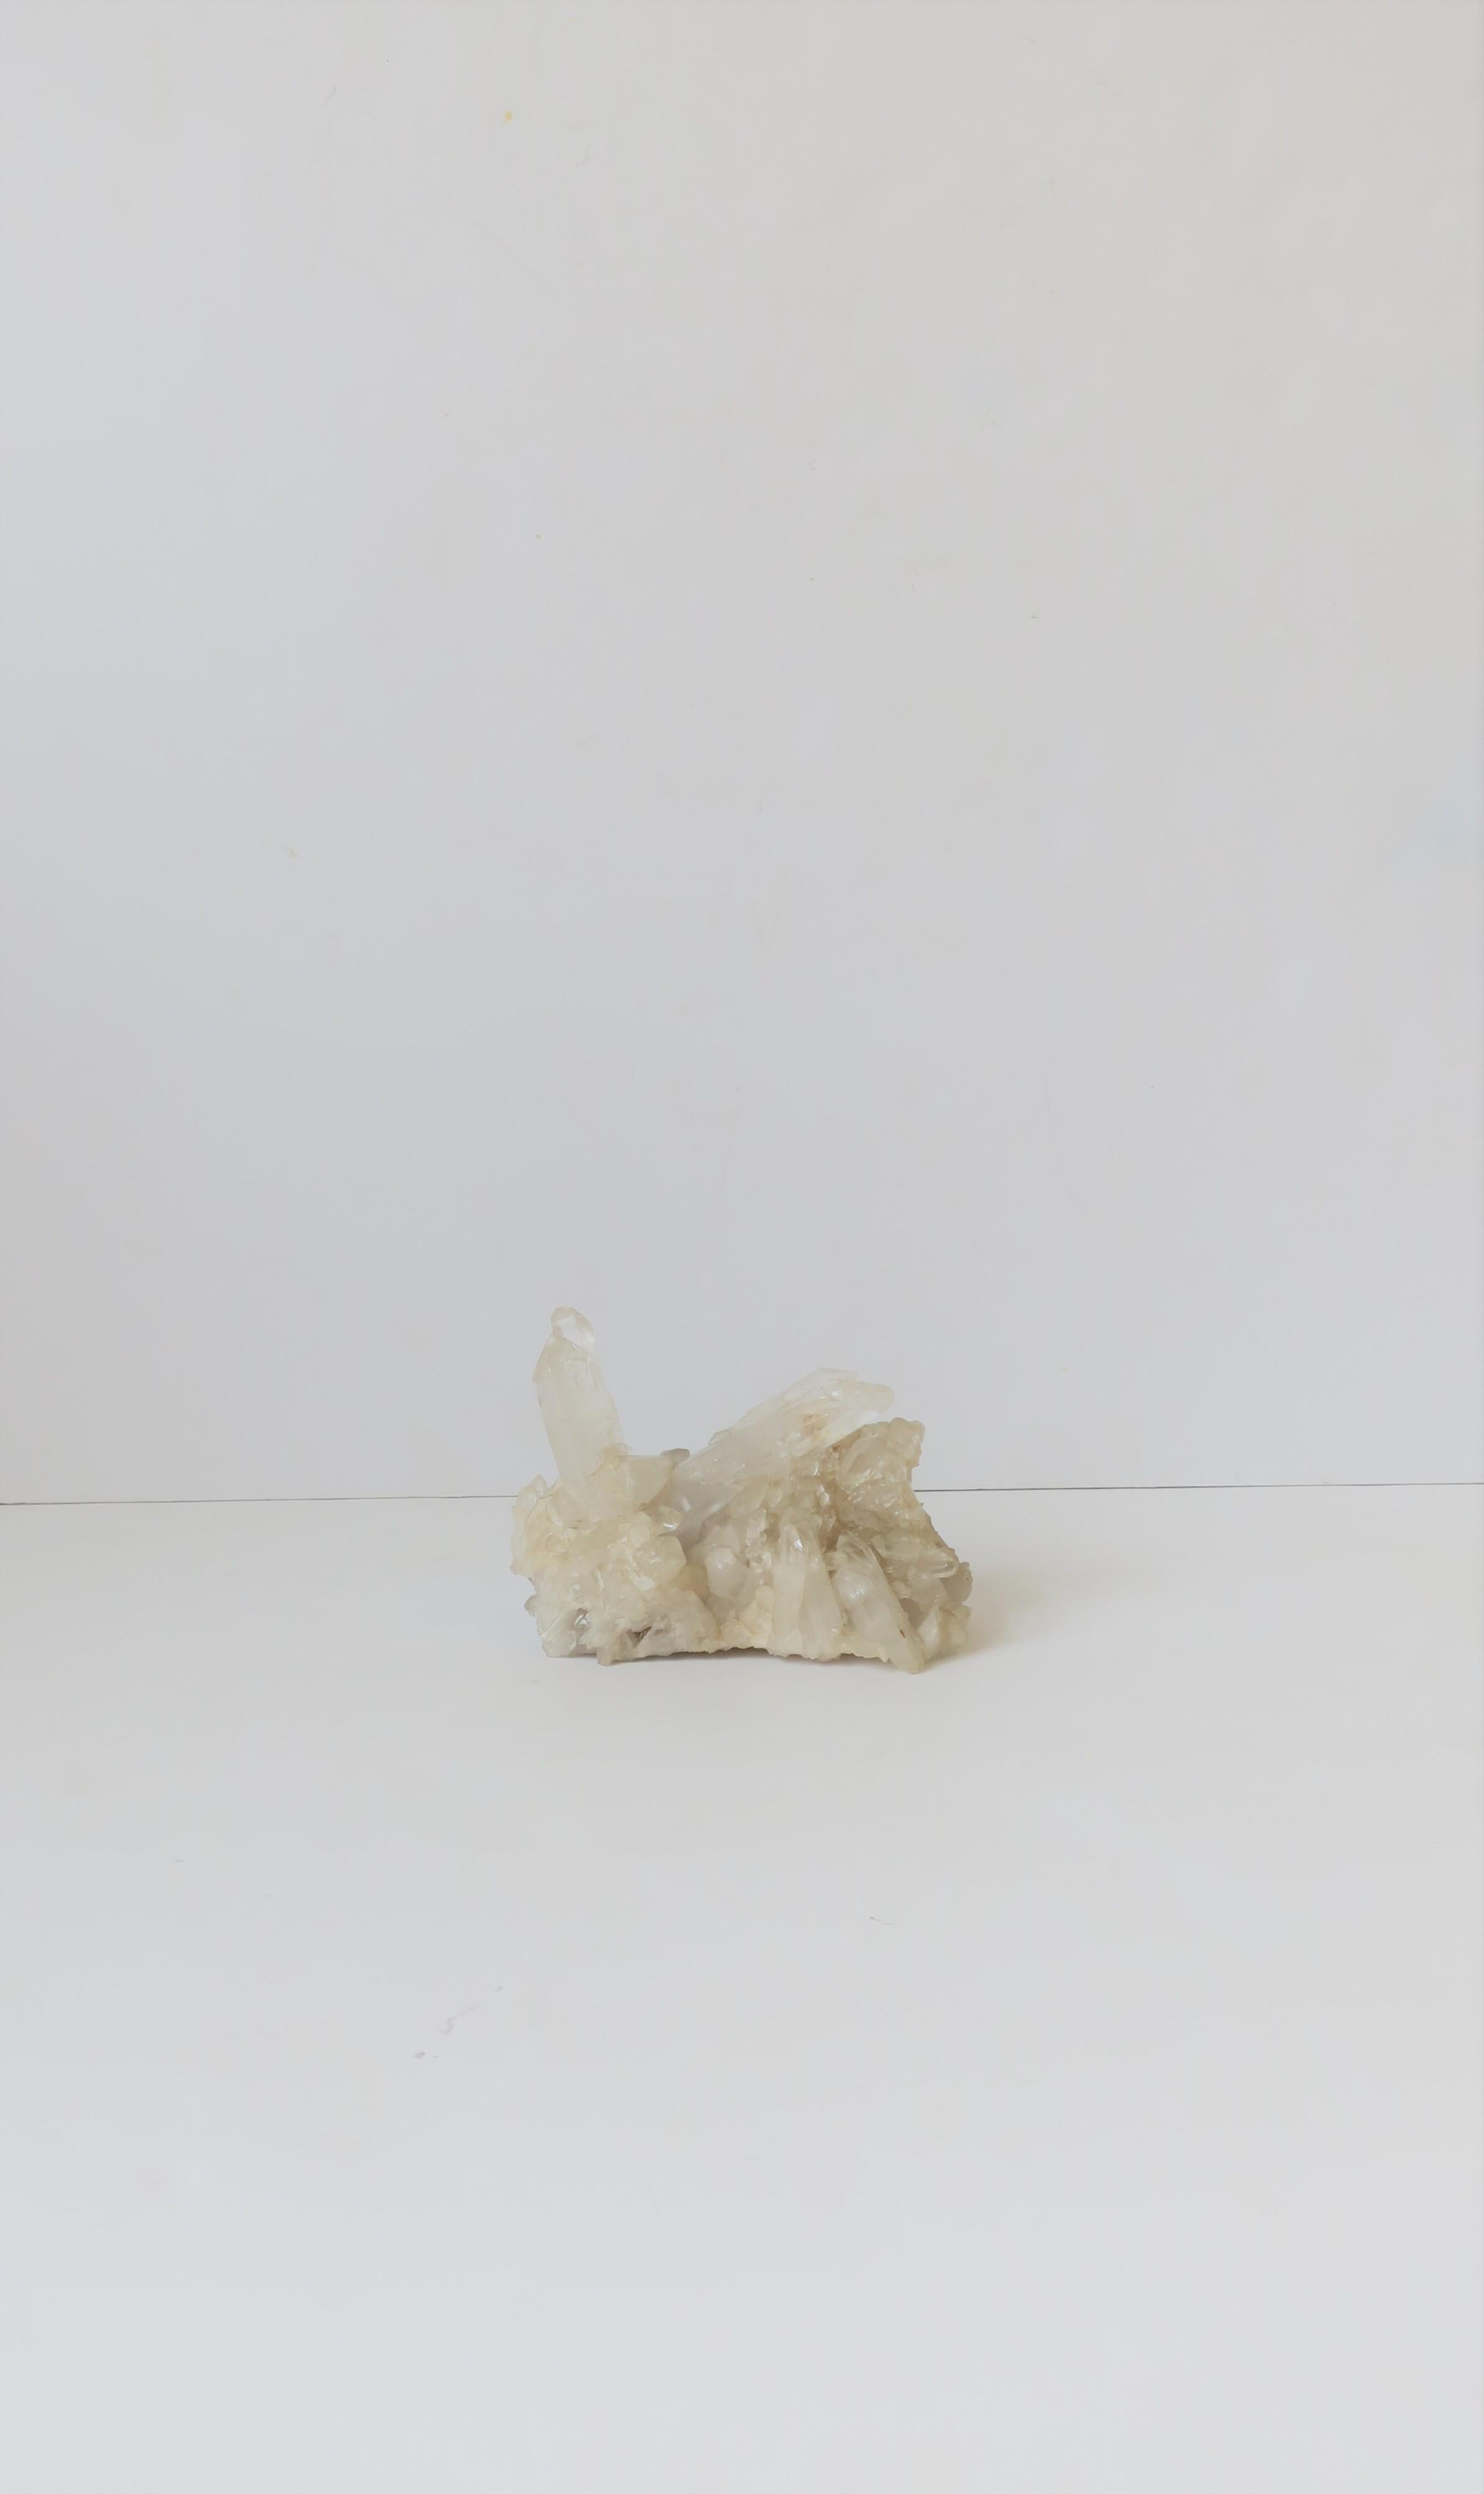 A rock crystal natural specimen piece aka clear quartz. 

Piece measures: 3.25